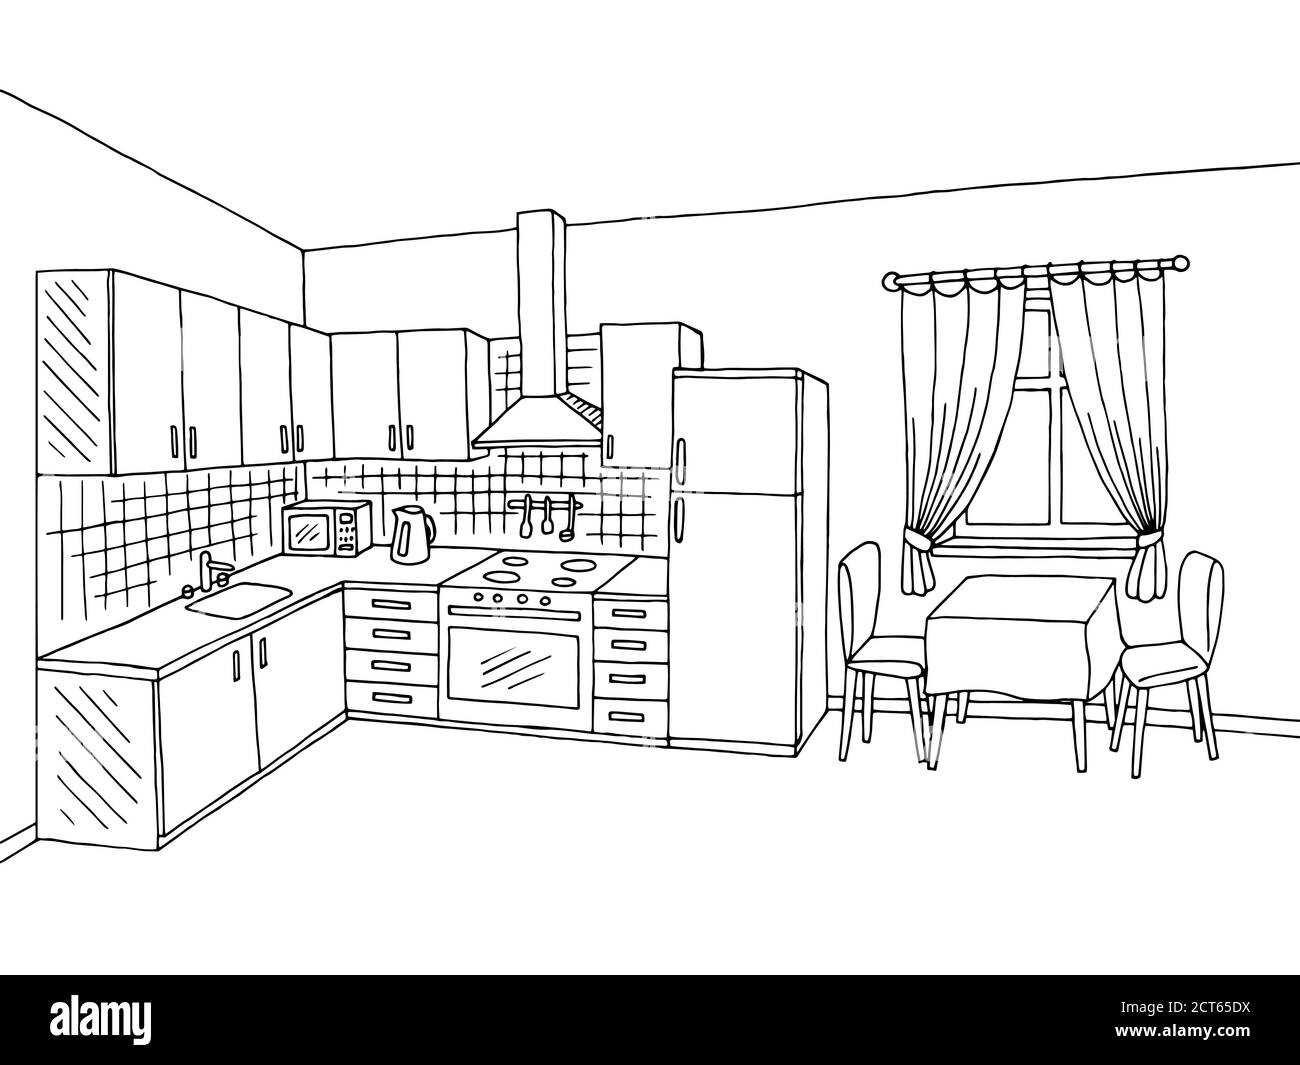 Kitchen room interior black white graphic art sketch illustration vector Stock Vector